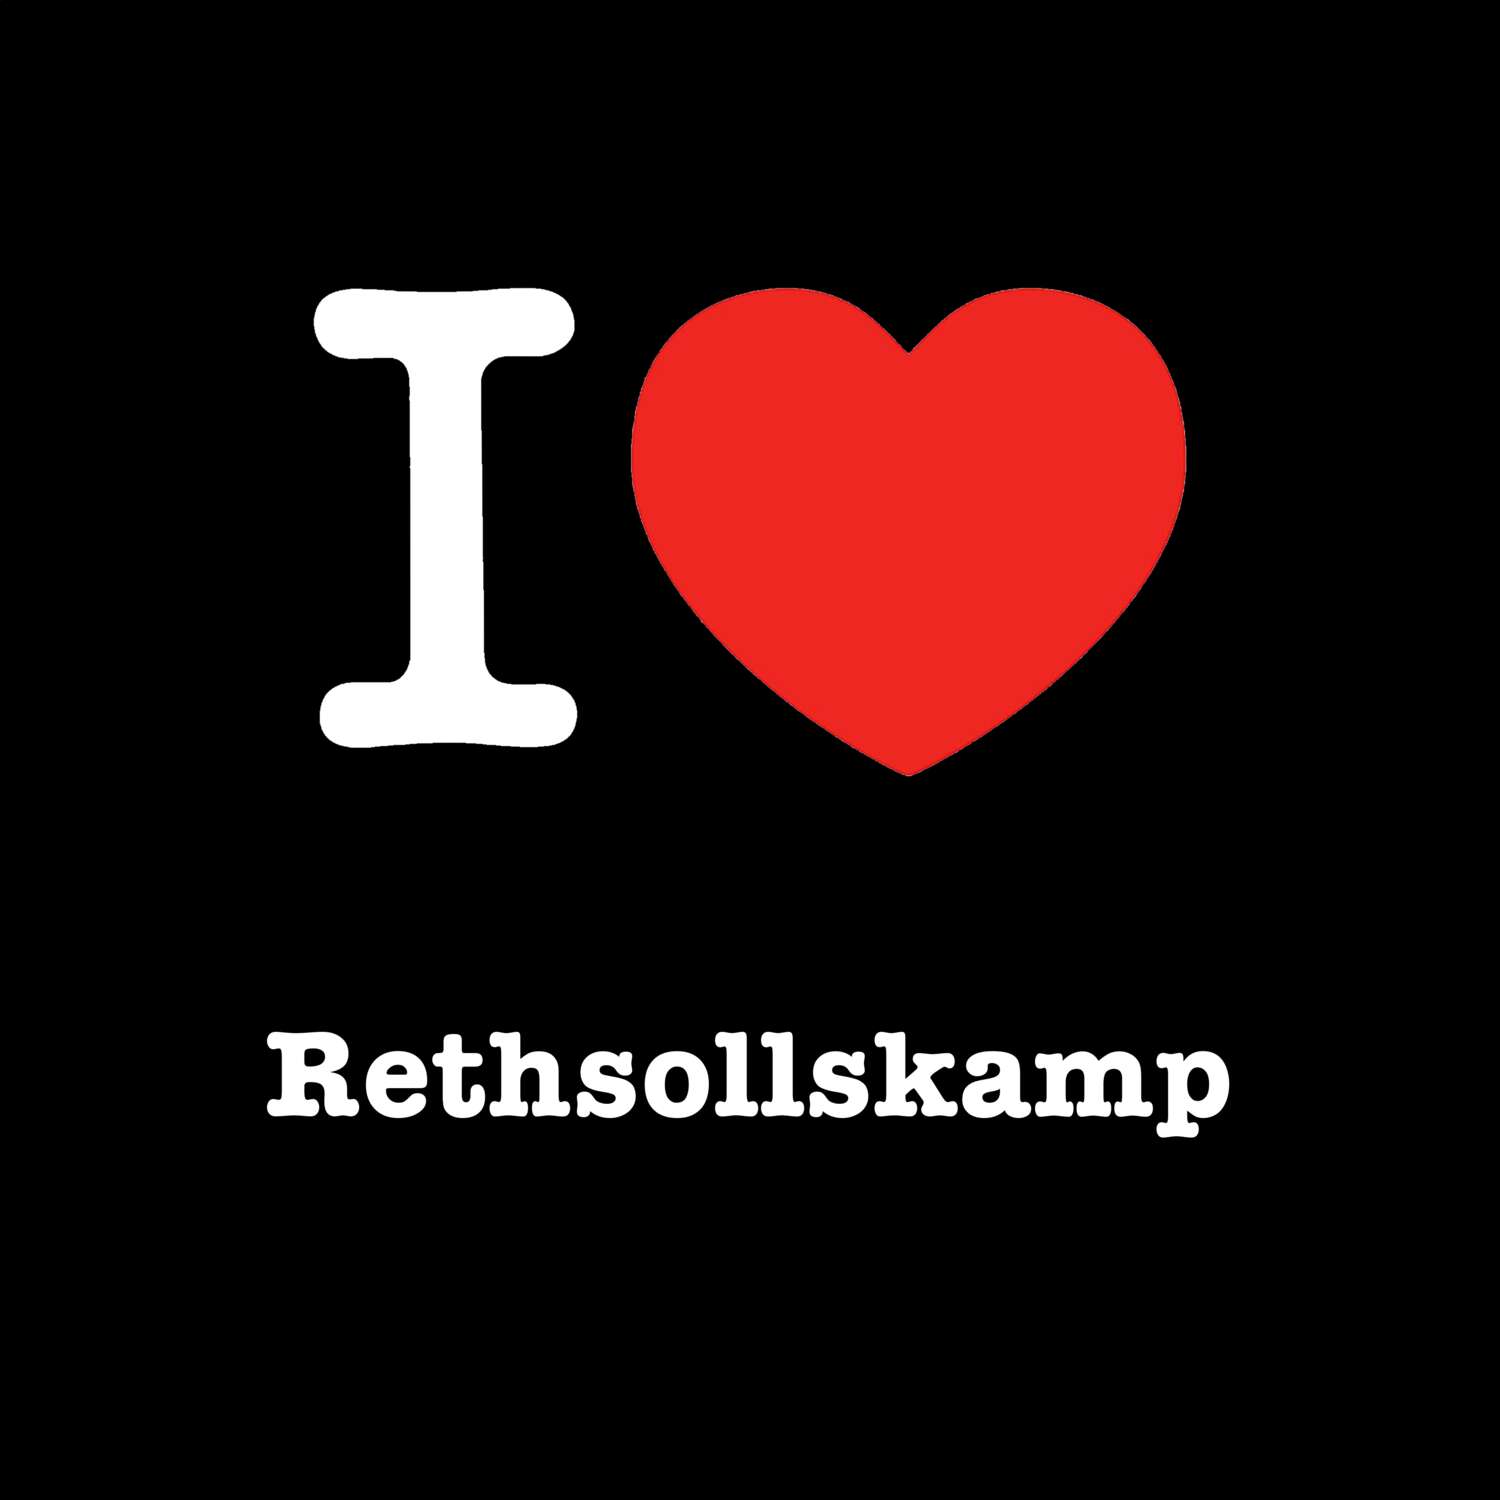 Rethsollskamp T-Shirt »I love«